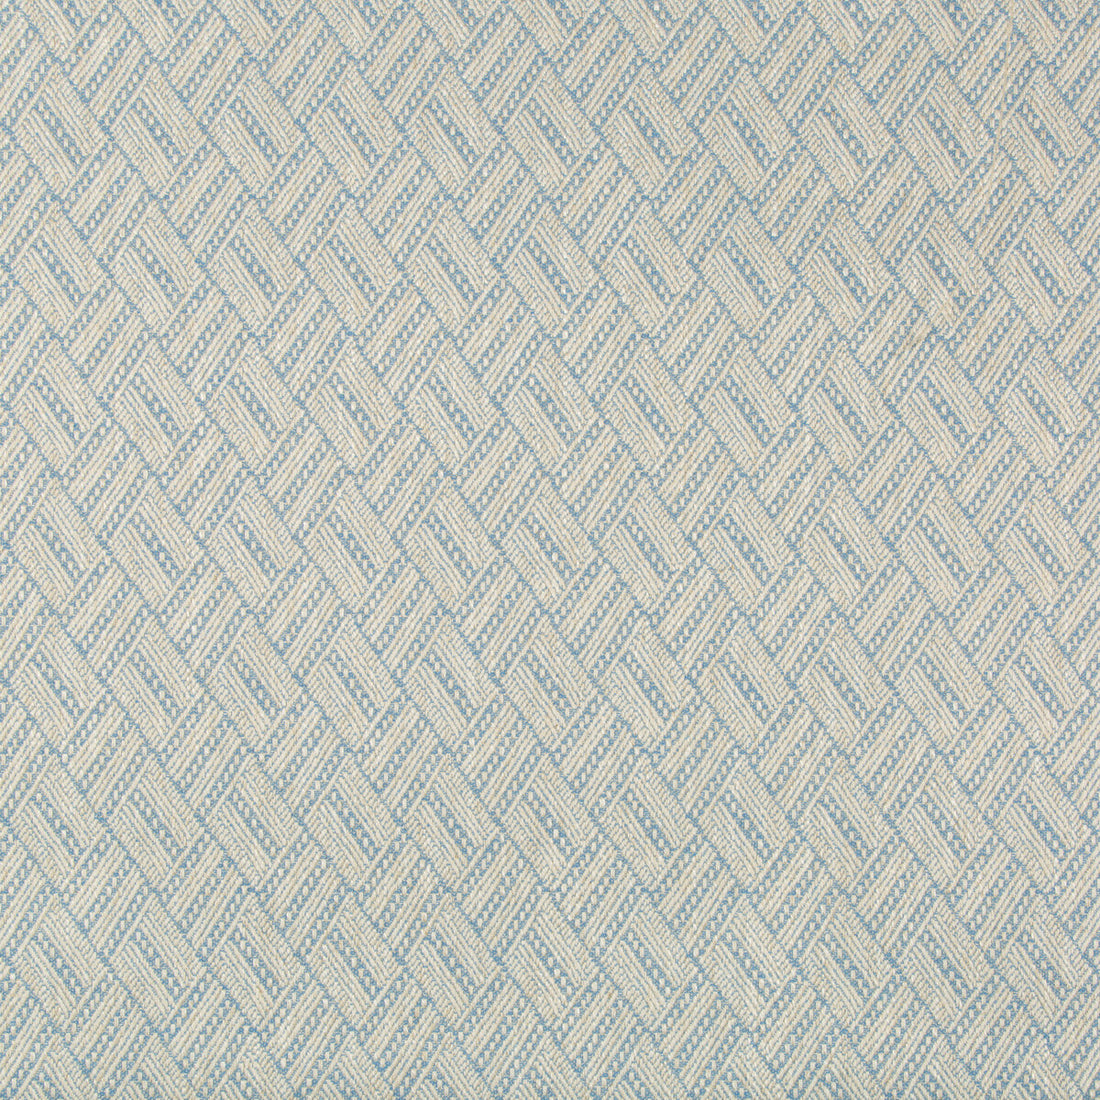 Kolmar fabric in cornflower color - pattern 2017159.15.0 - by Lee Jofa in the Westport collection